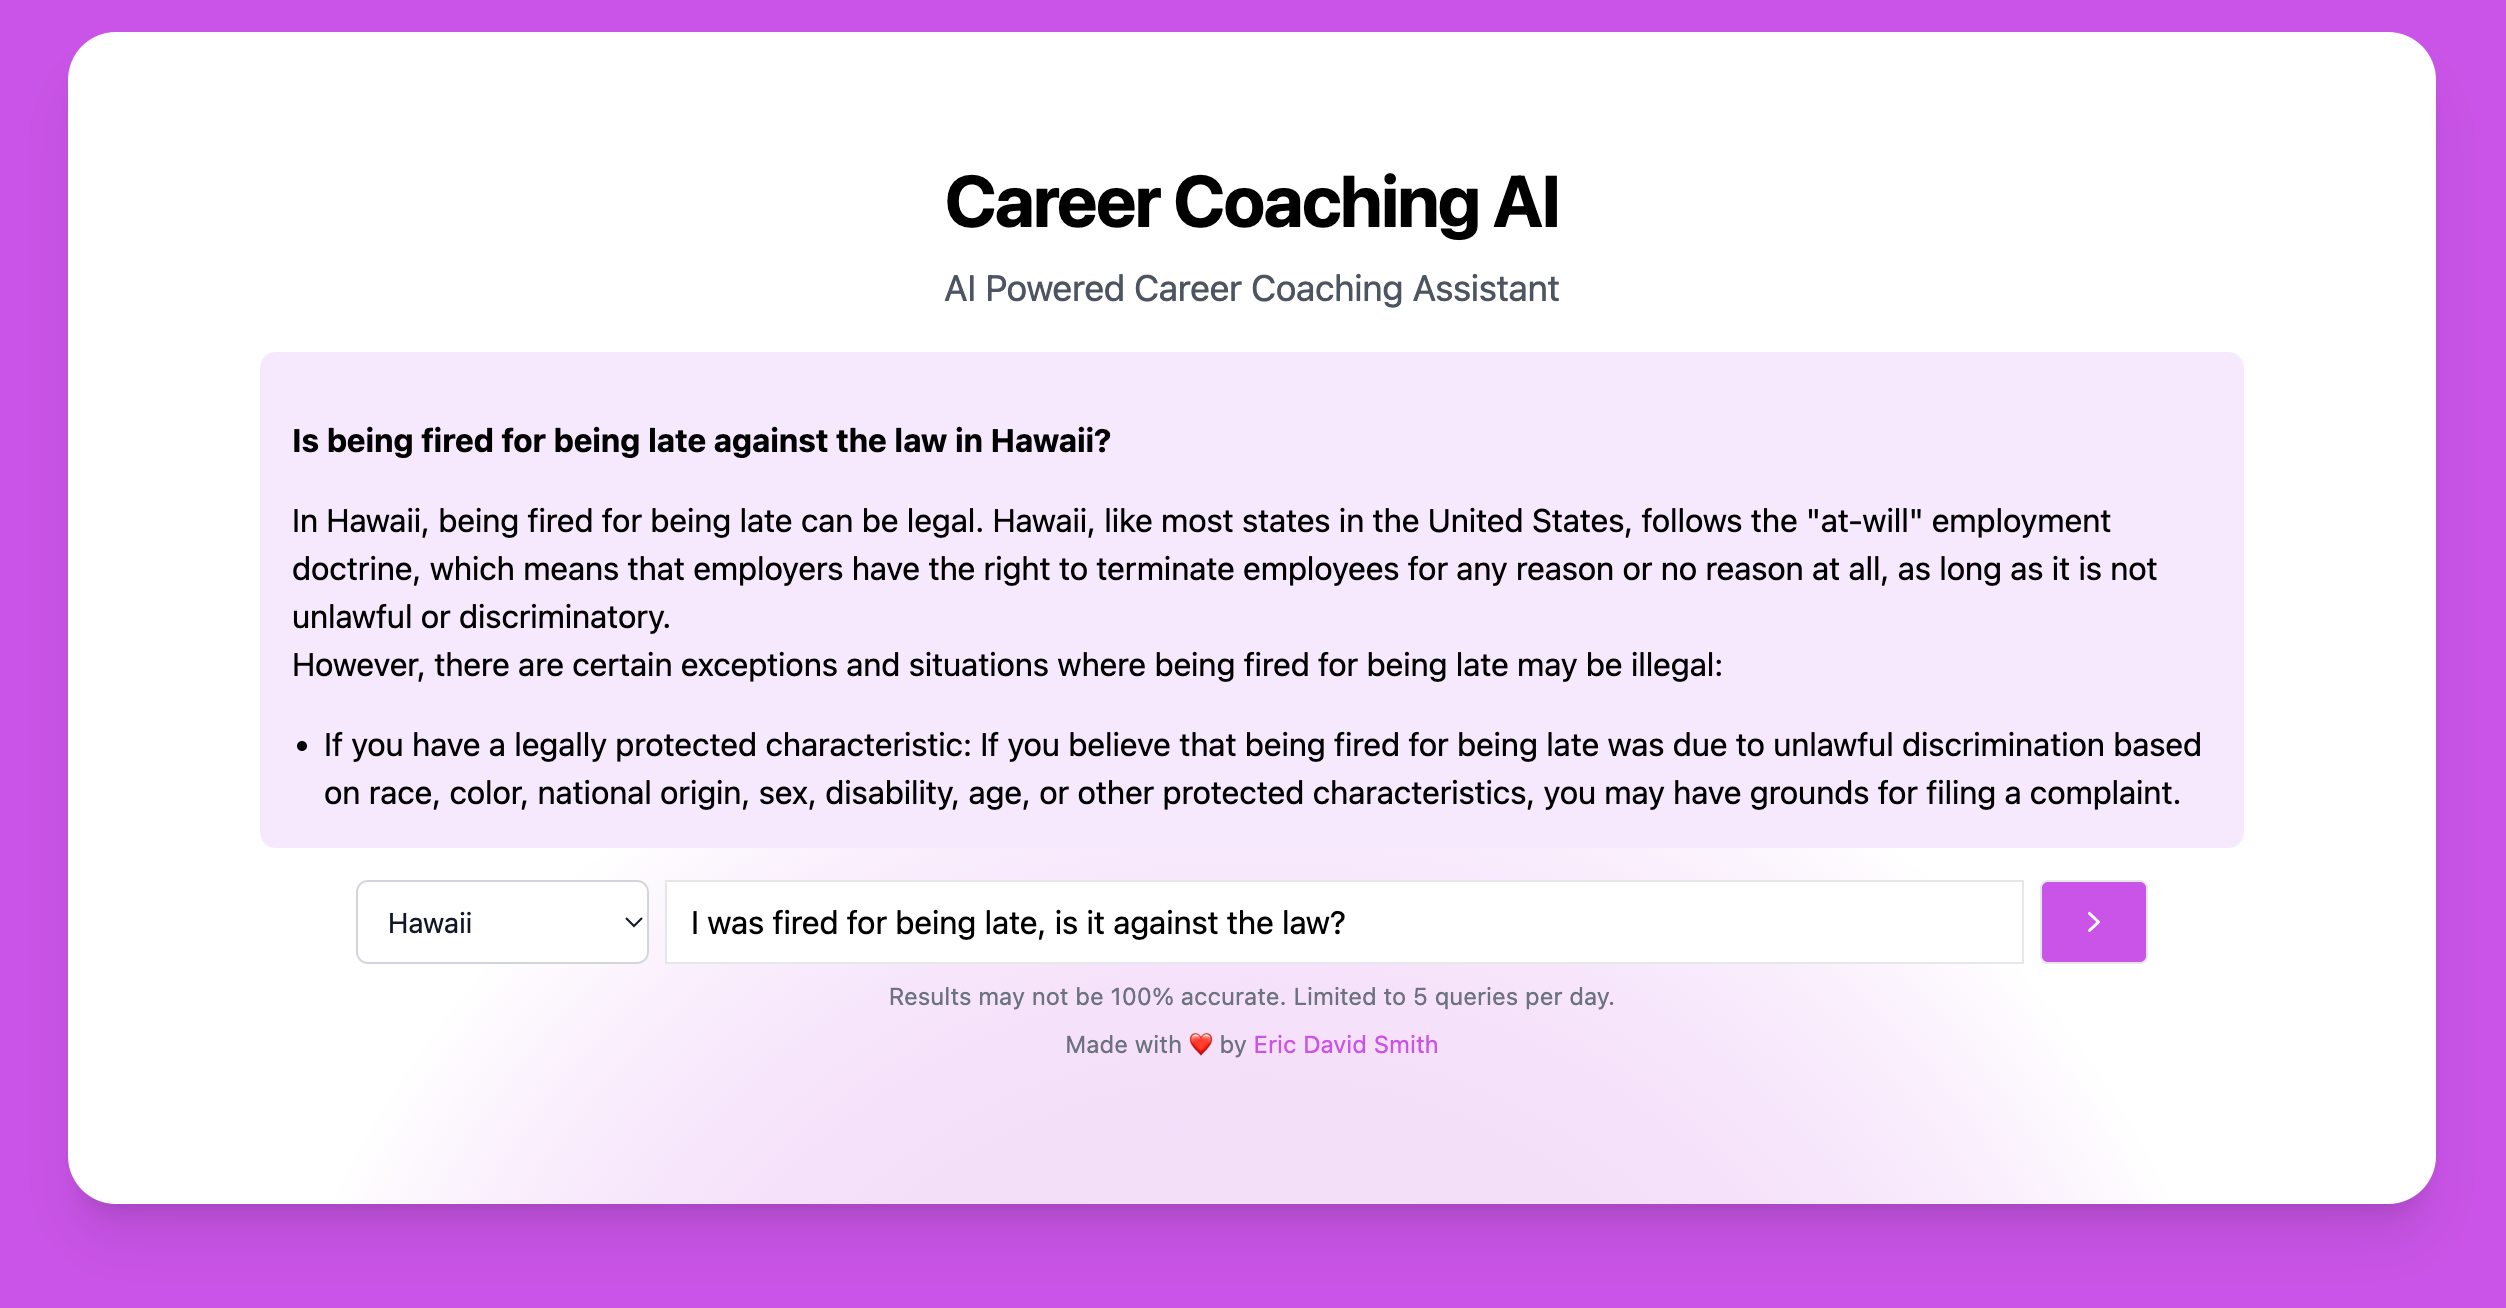 Career Coaching AI Example by Eric David Smith